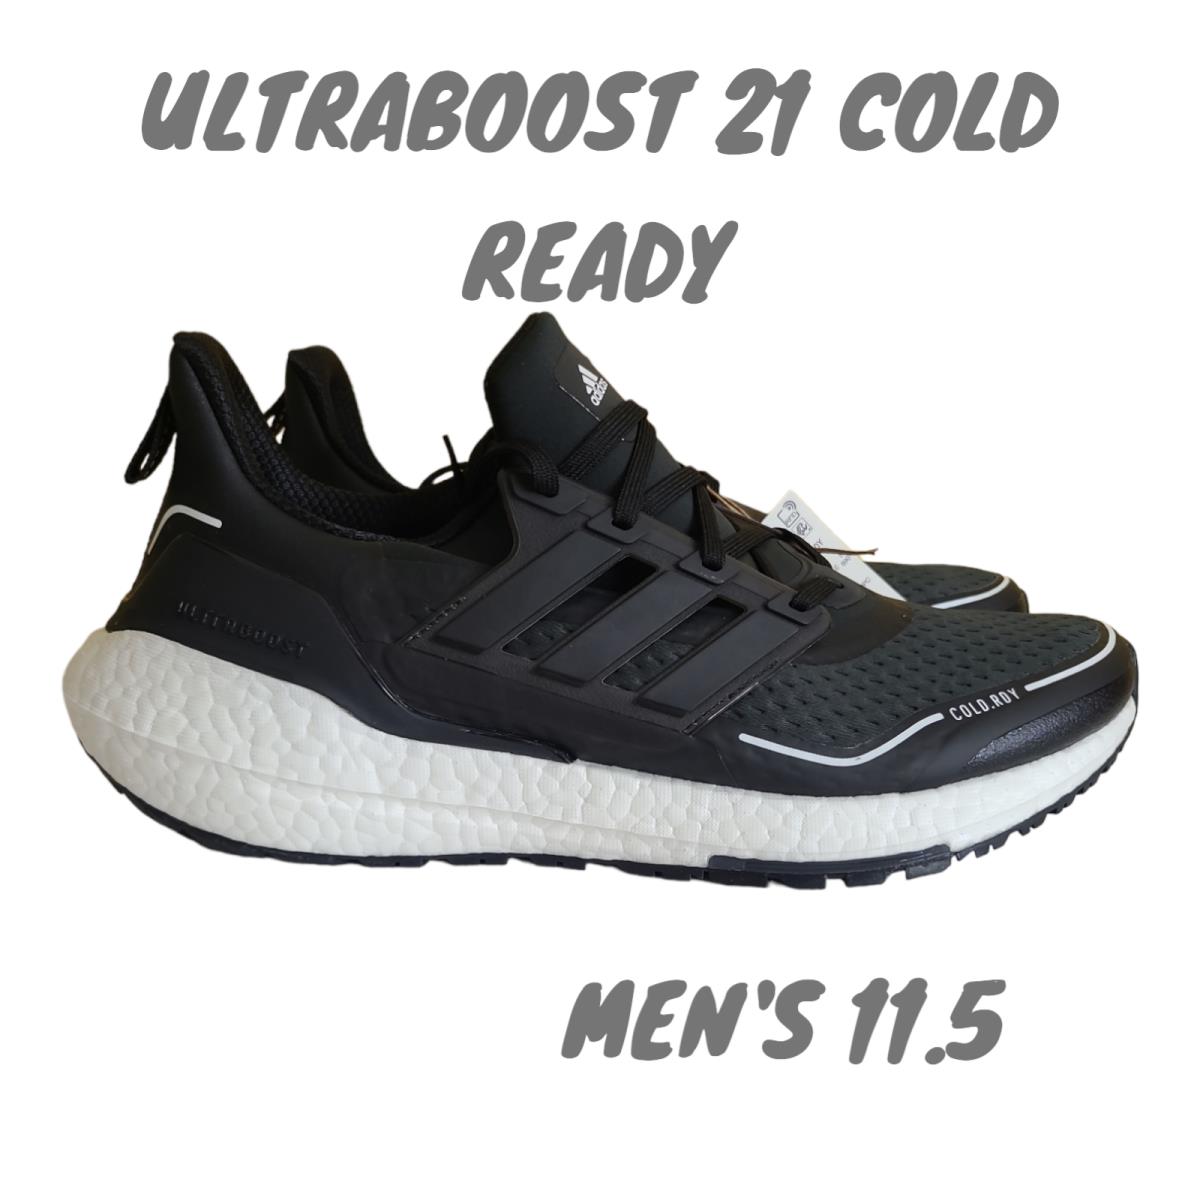 Adidas Ultraboost 21 Cold.rdy Mens Running Shoes Sz 11.5 Core Black FZ2558